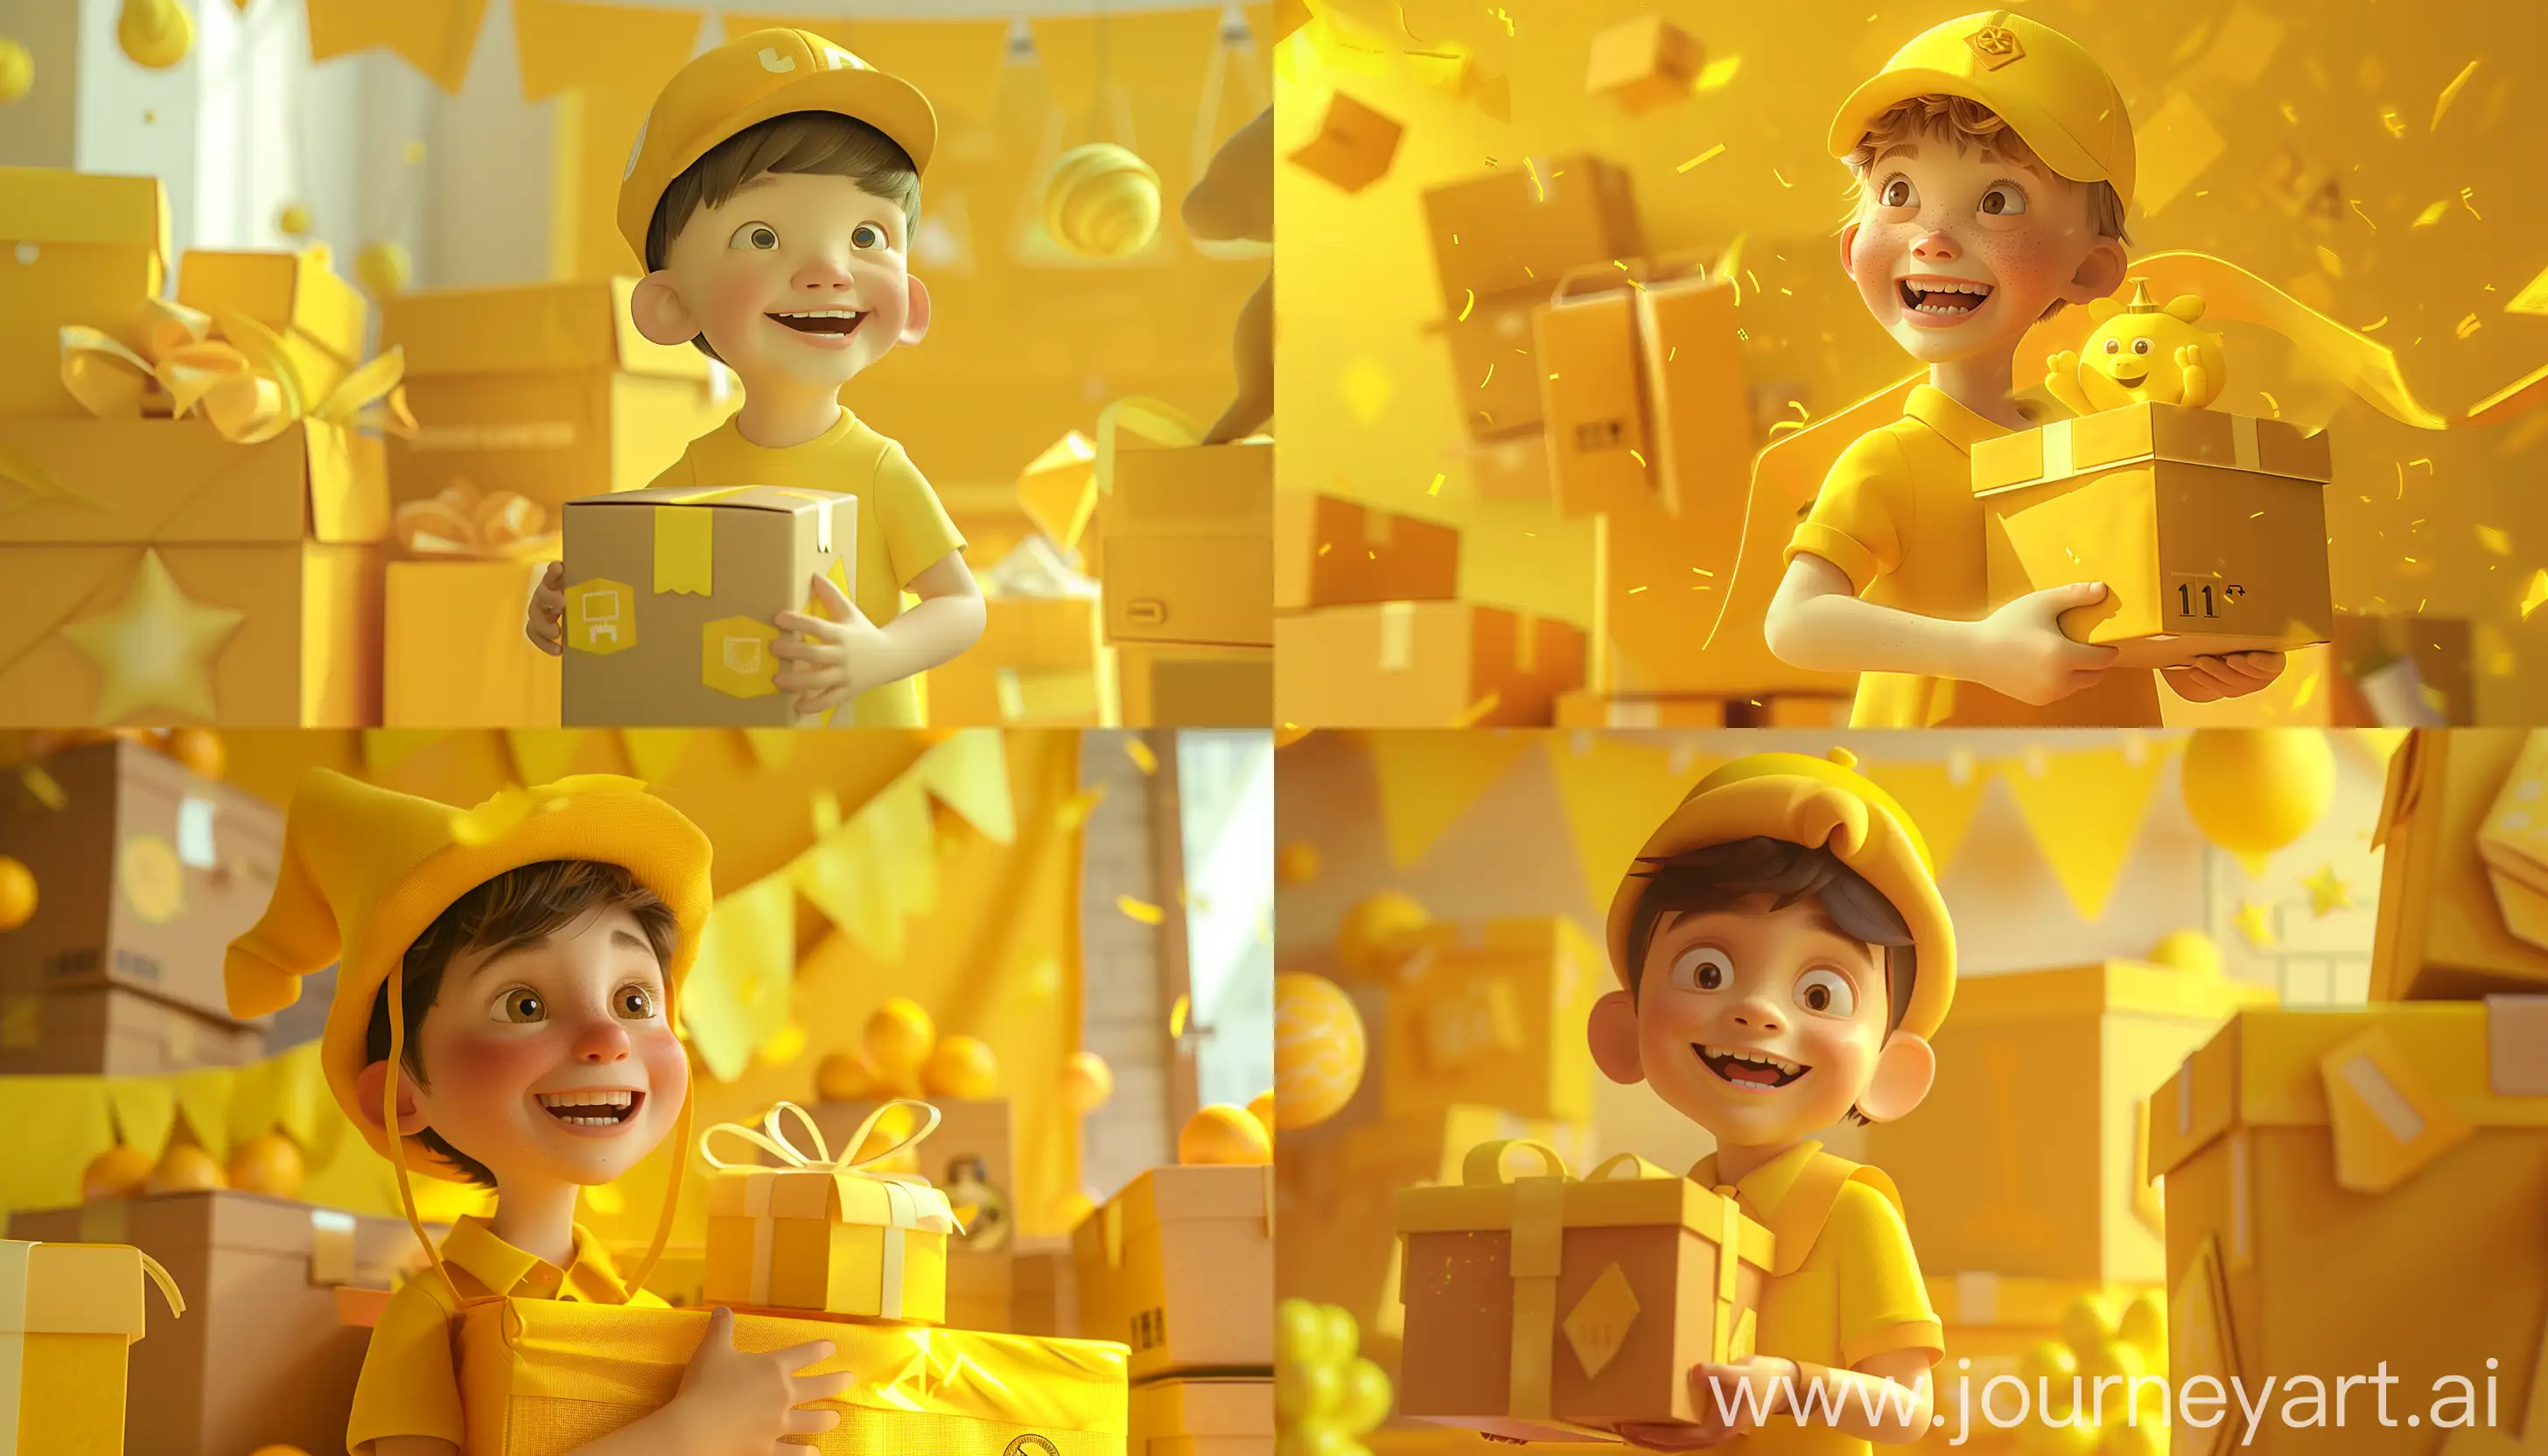 Joyful-Boy-in-Yellow-Holding-a-Gift-Box